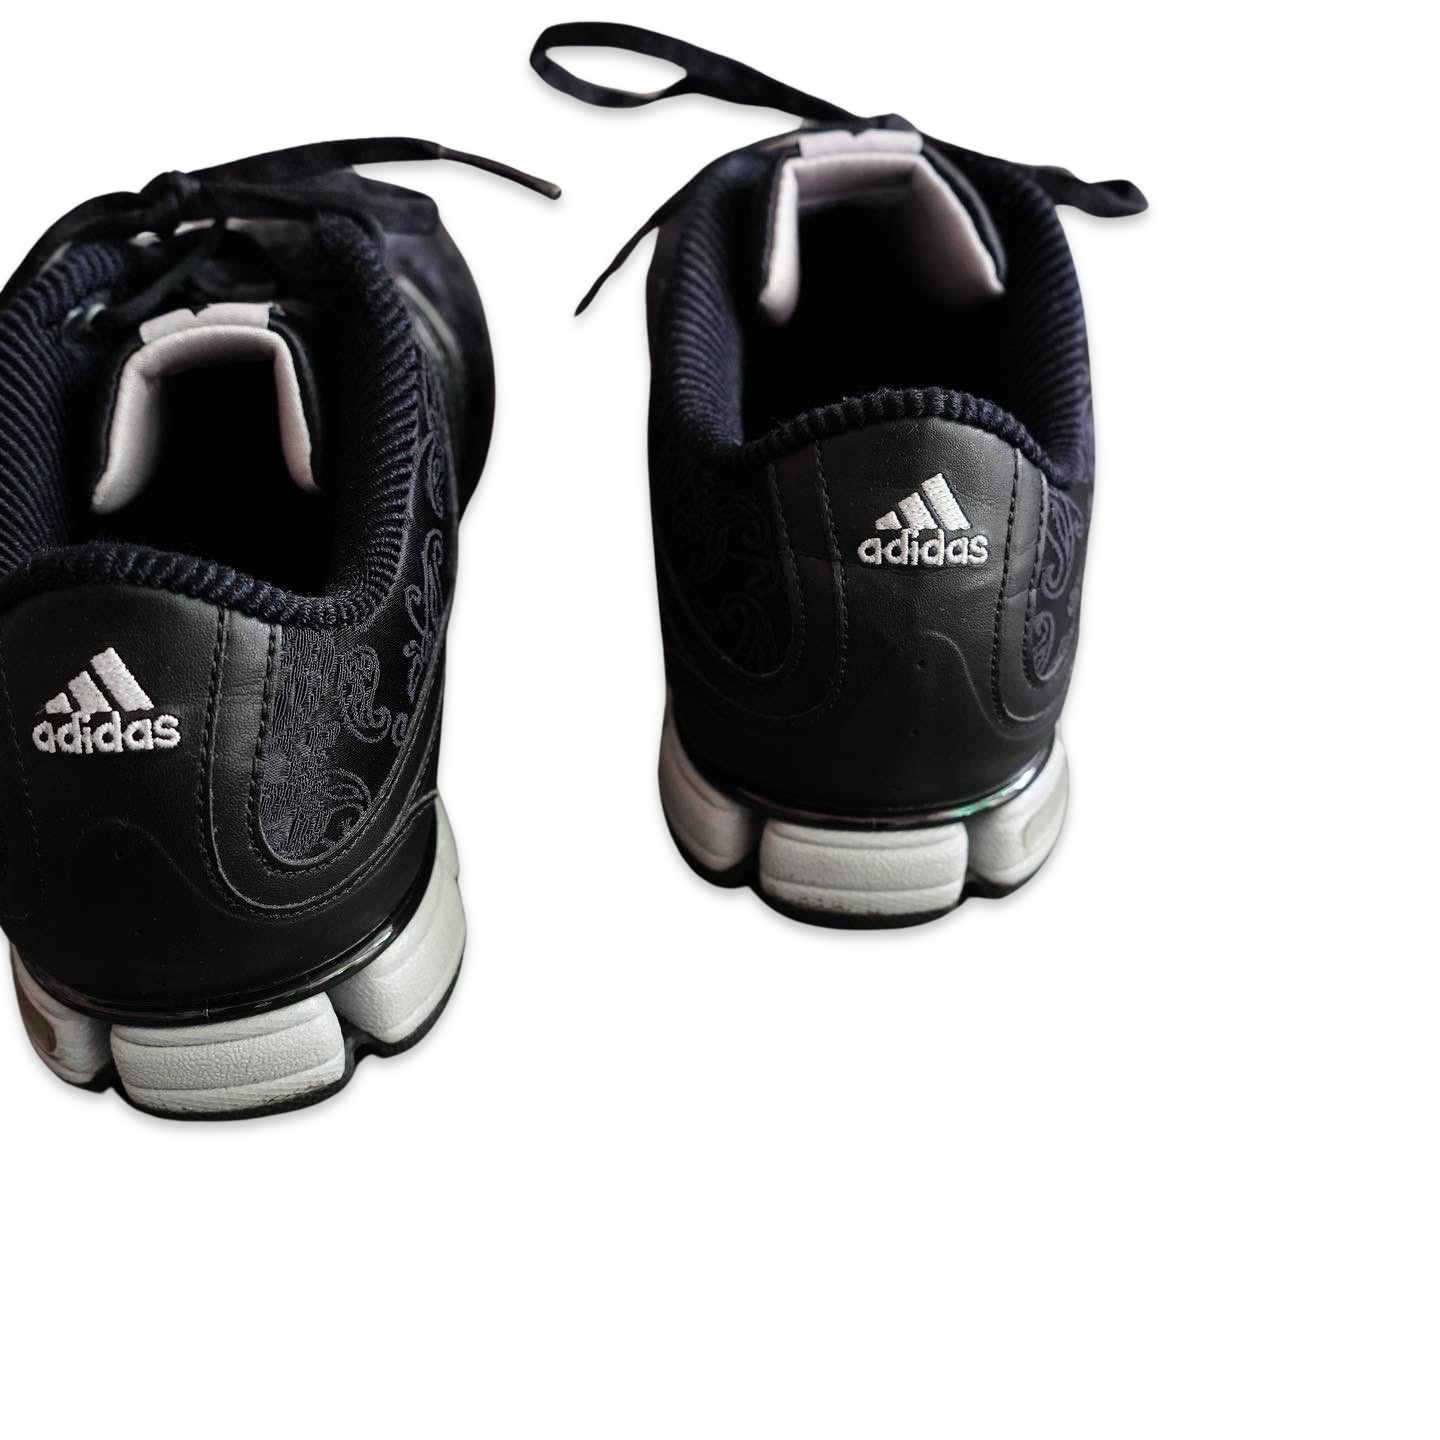 Adidas 3-D Cushion Sneakers